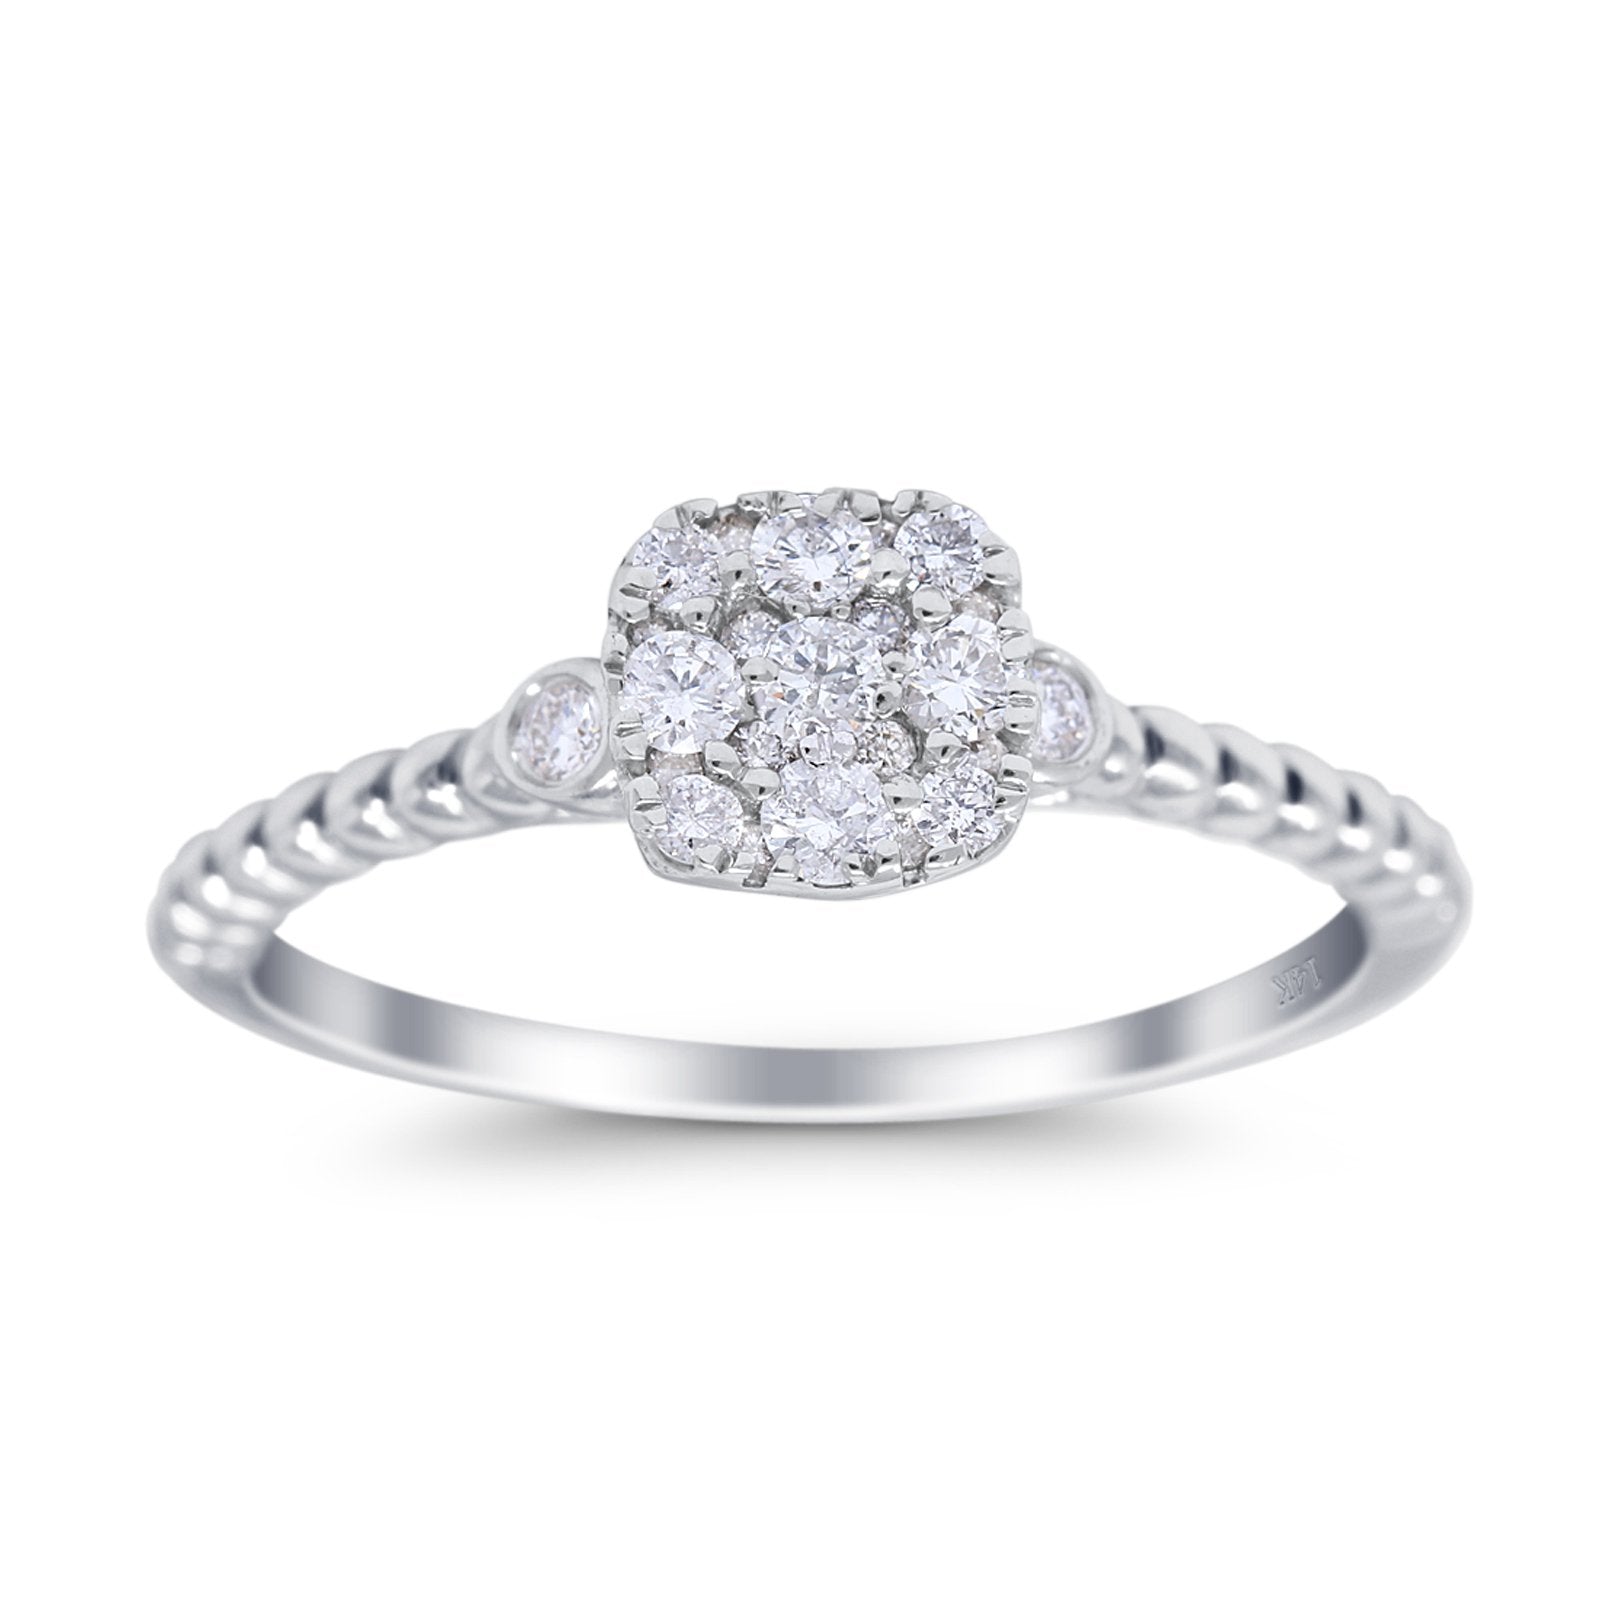 14K Gold 0.26ct Round 6.3mm G SI Diamond Engagement Wedding Promise Ring